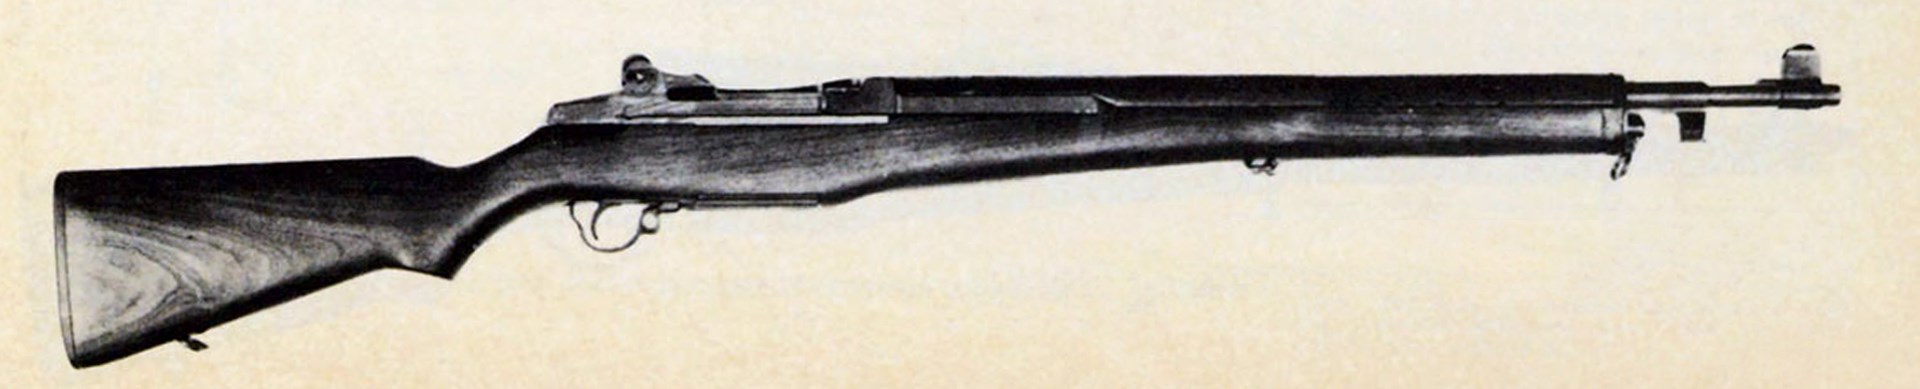 U.S. Rifle Cal. .30 M1E8.